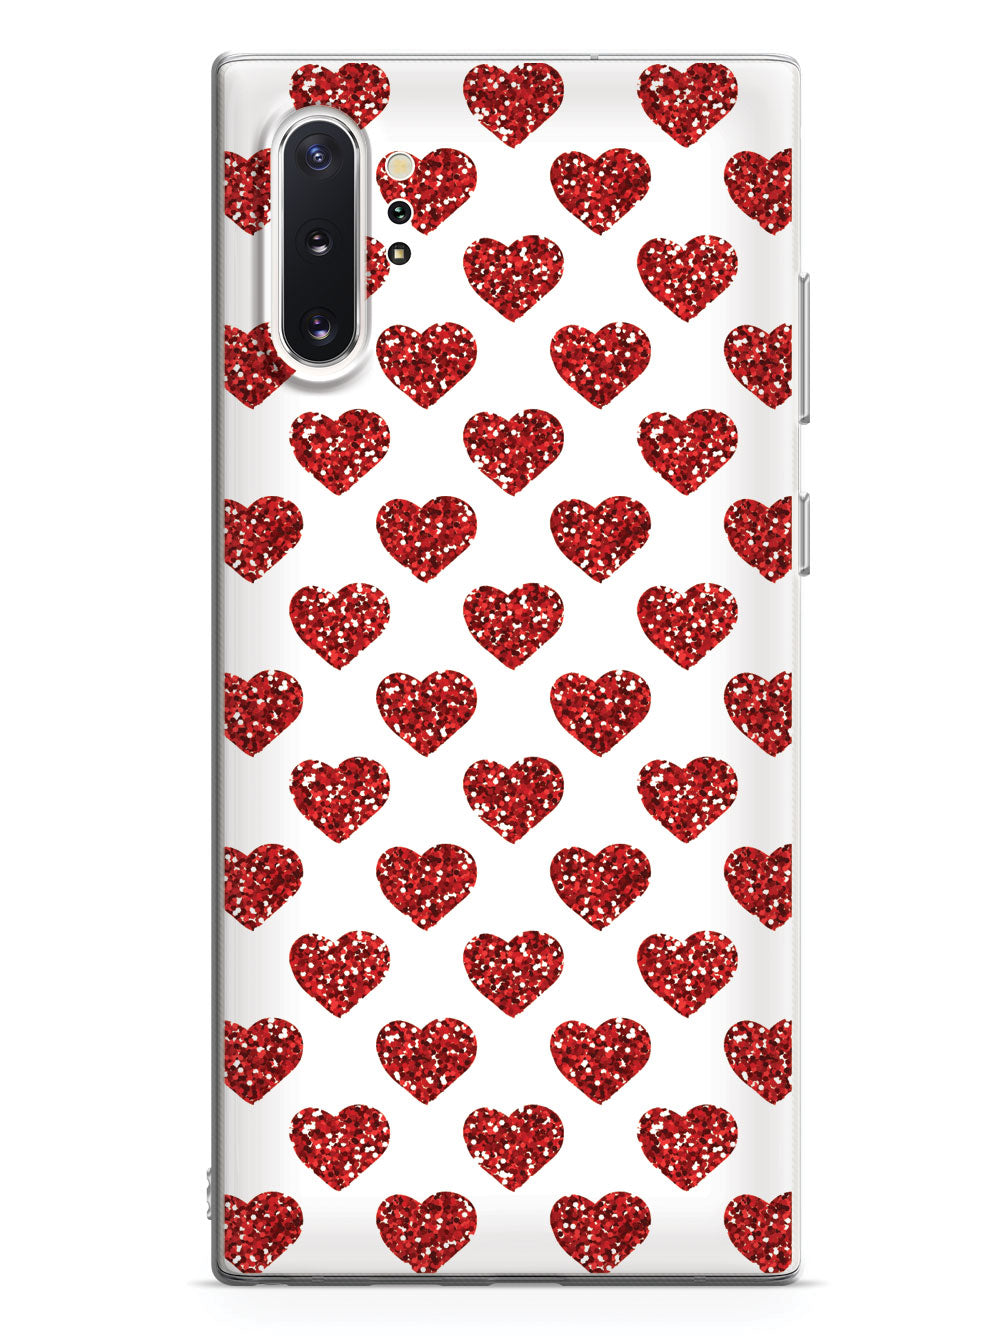 Red Glitter Heart Pattern - White Case